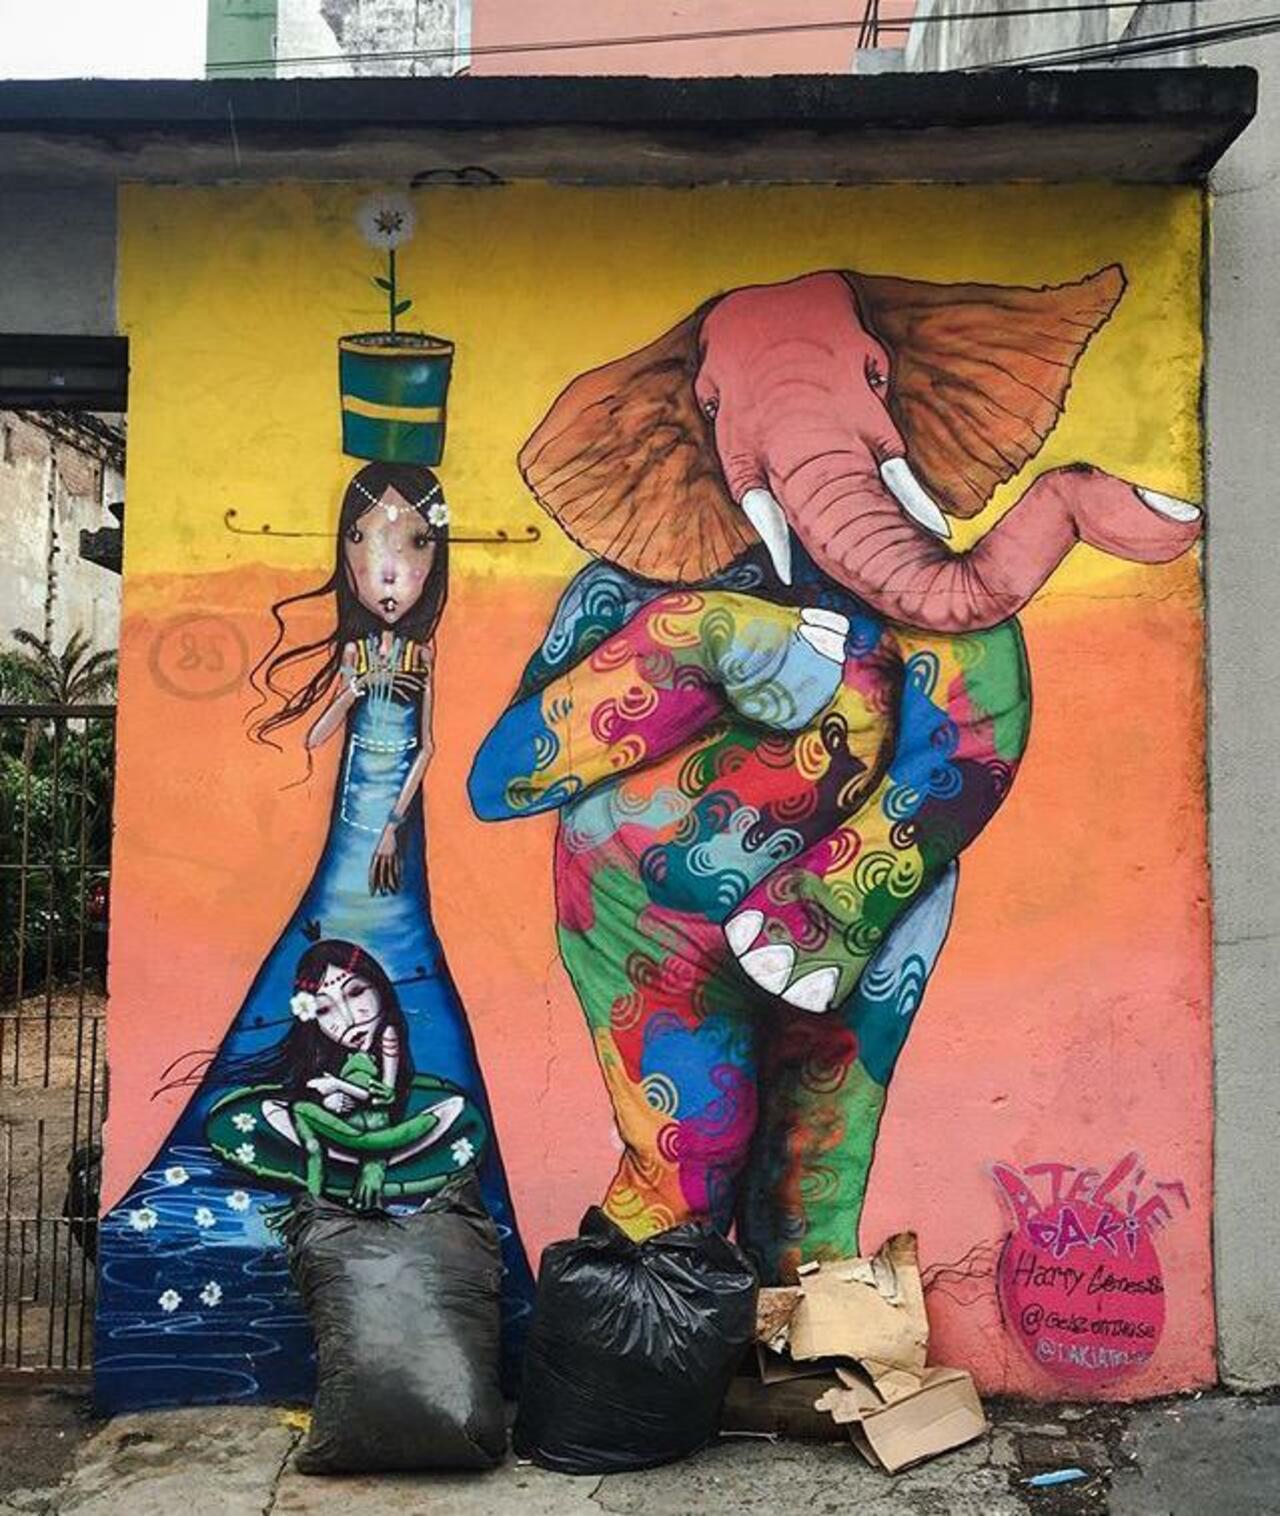 Street Art by Harry Geneis & Gelson in São Paulo 

#art #mural #graffiti #streetart http://t.co/SlLbhuMZfD … … …… http://twitter.com/GoogleStreetArt/status/648016473831645184/photo/1/large?utm_source=fb&utm_medium=fb&utm_campaign=charlesjackso14&utm_content=648021472900960256